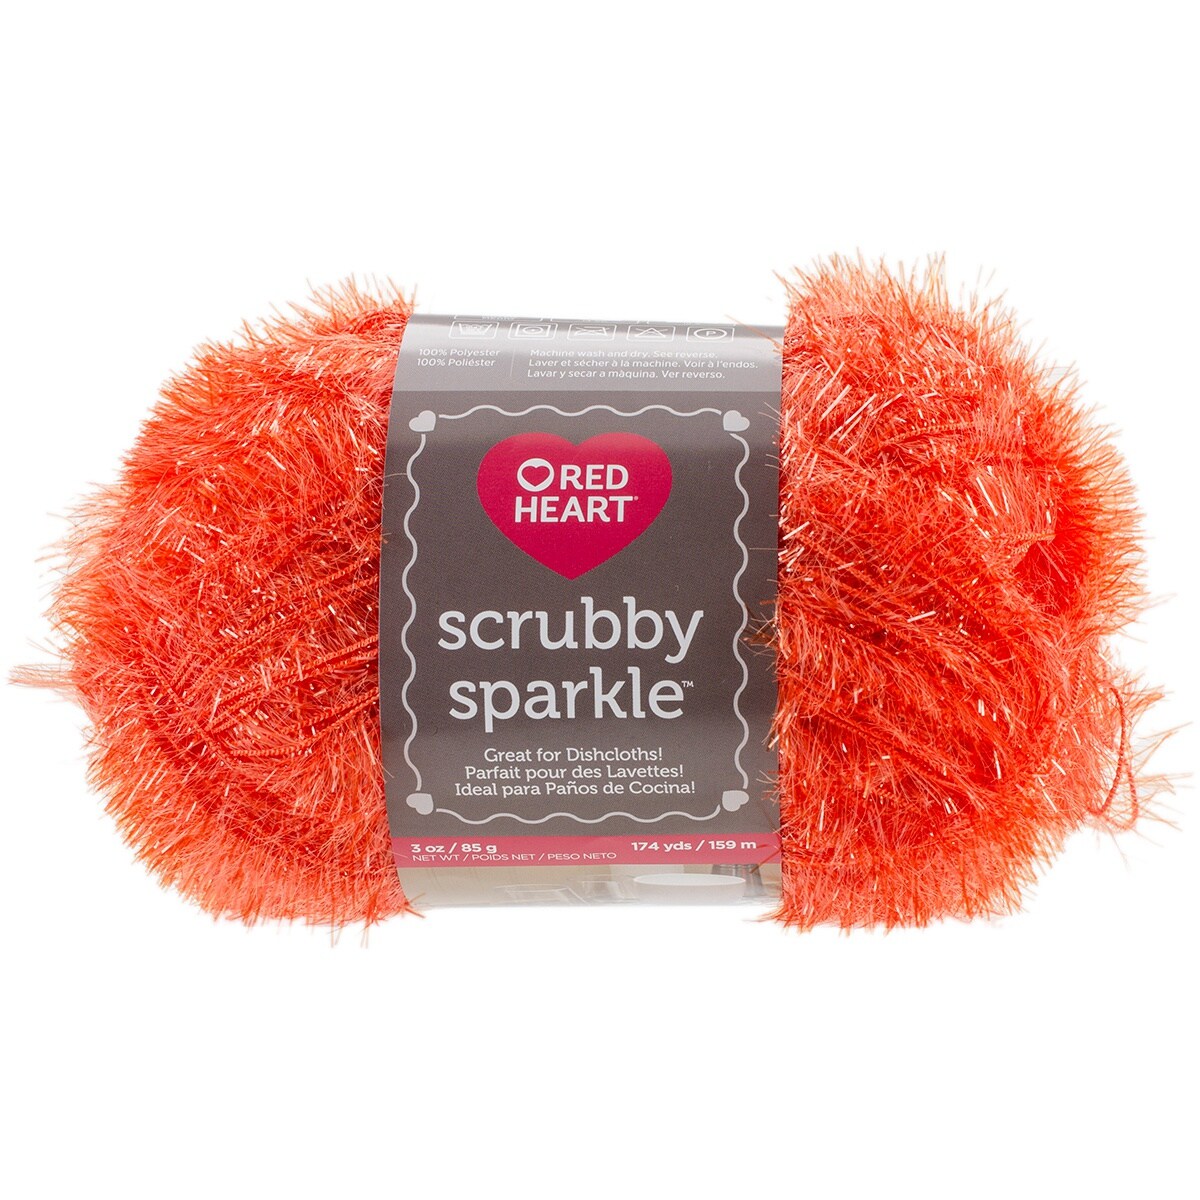 Red Heart Scrubby Sparkle Orange Yarn - 3 Pack of 85g/3oz - Polyester - 4  Medium (Worsted) - 174 Yards - Knitting/Crochet